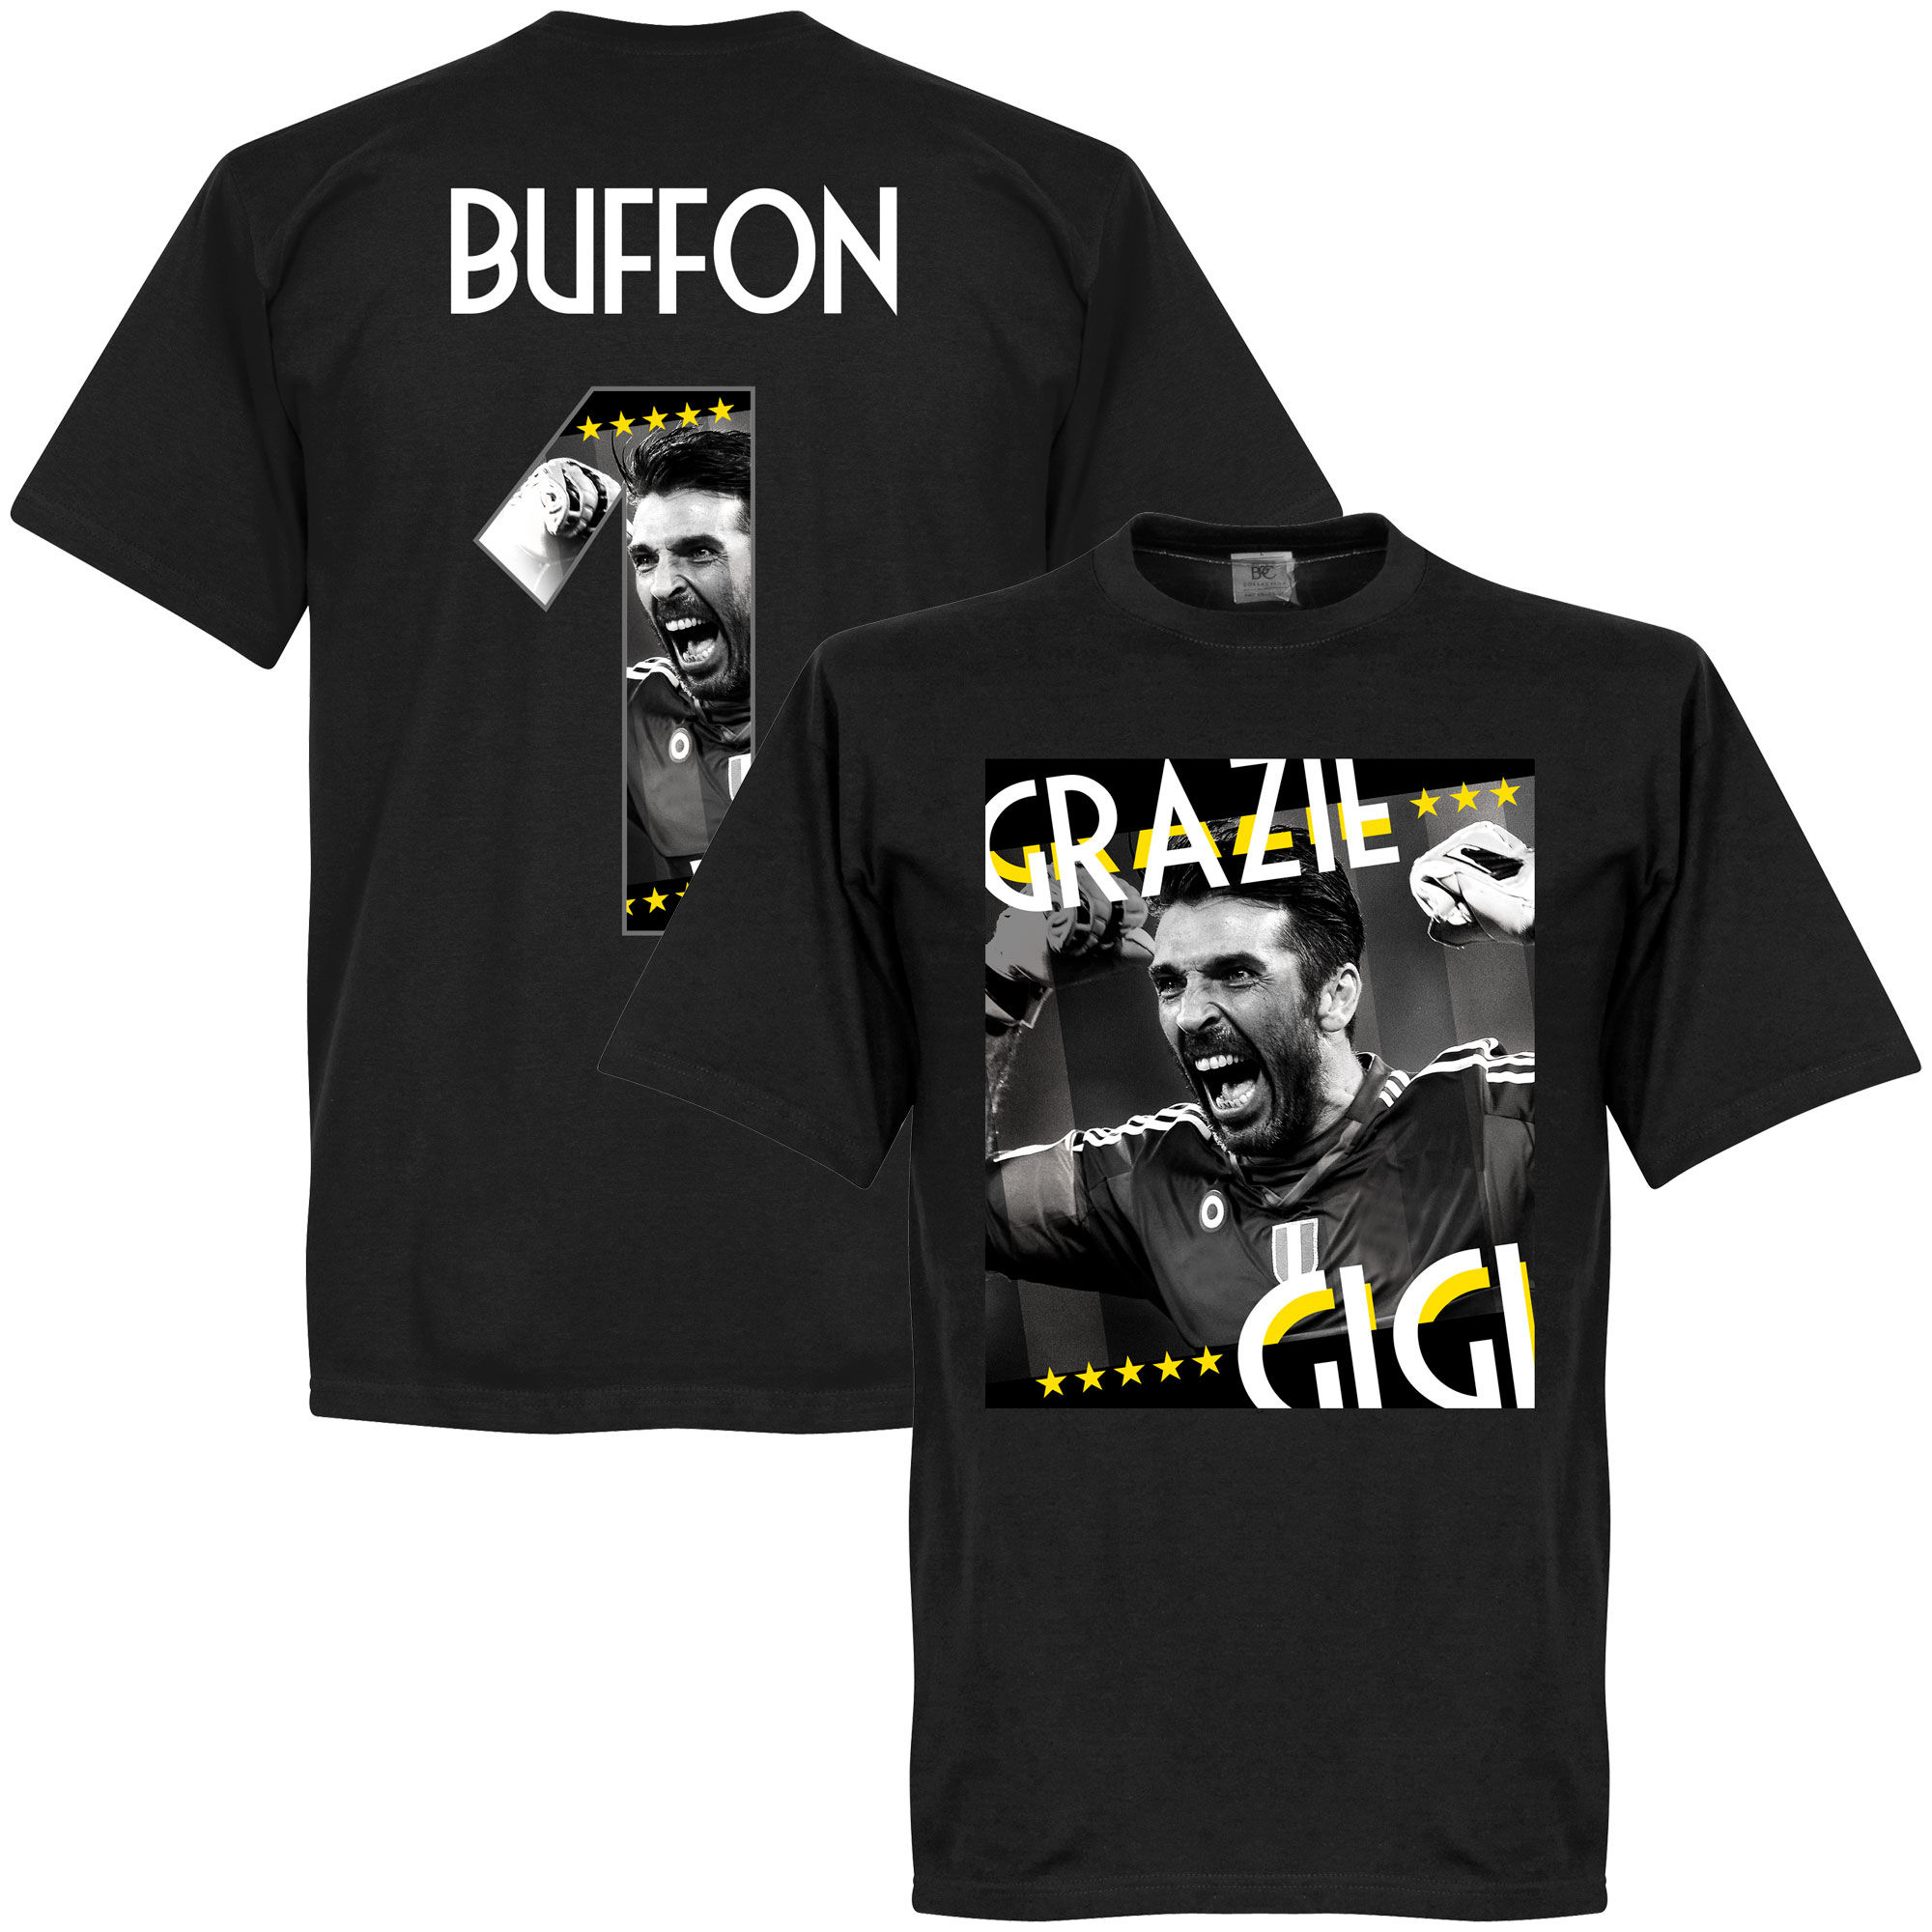 Juventus FC - Tričko "Grazie" - číslo 1, Gianluigi Buffon, černé